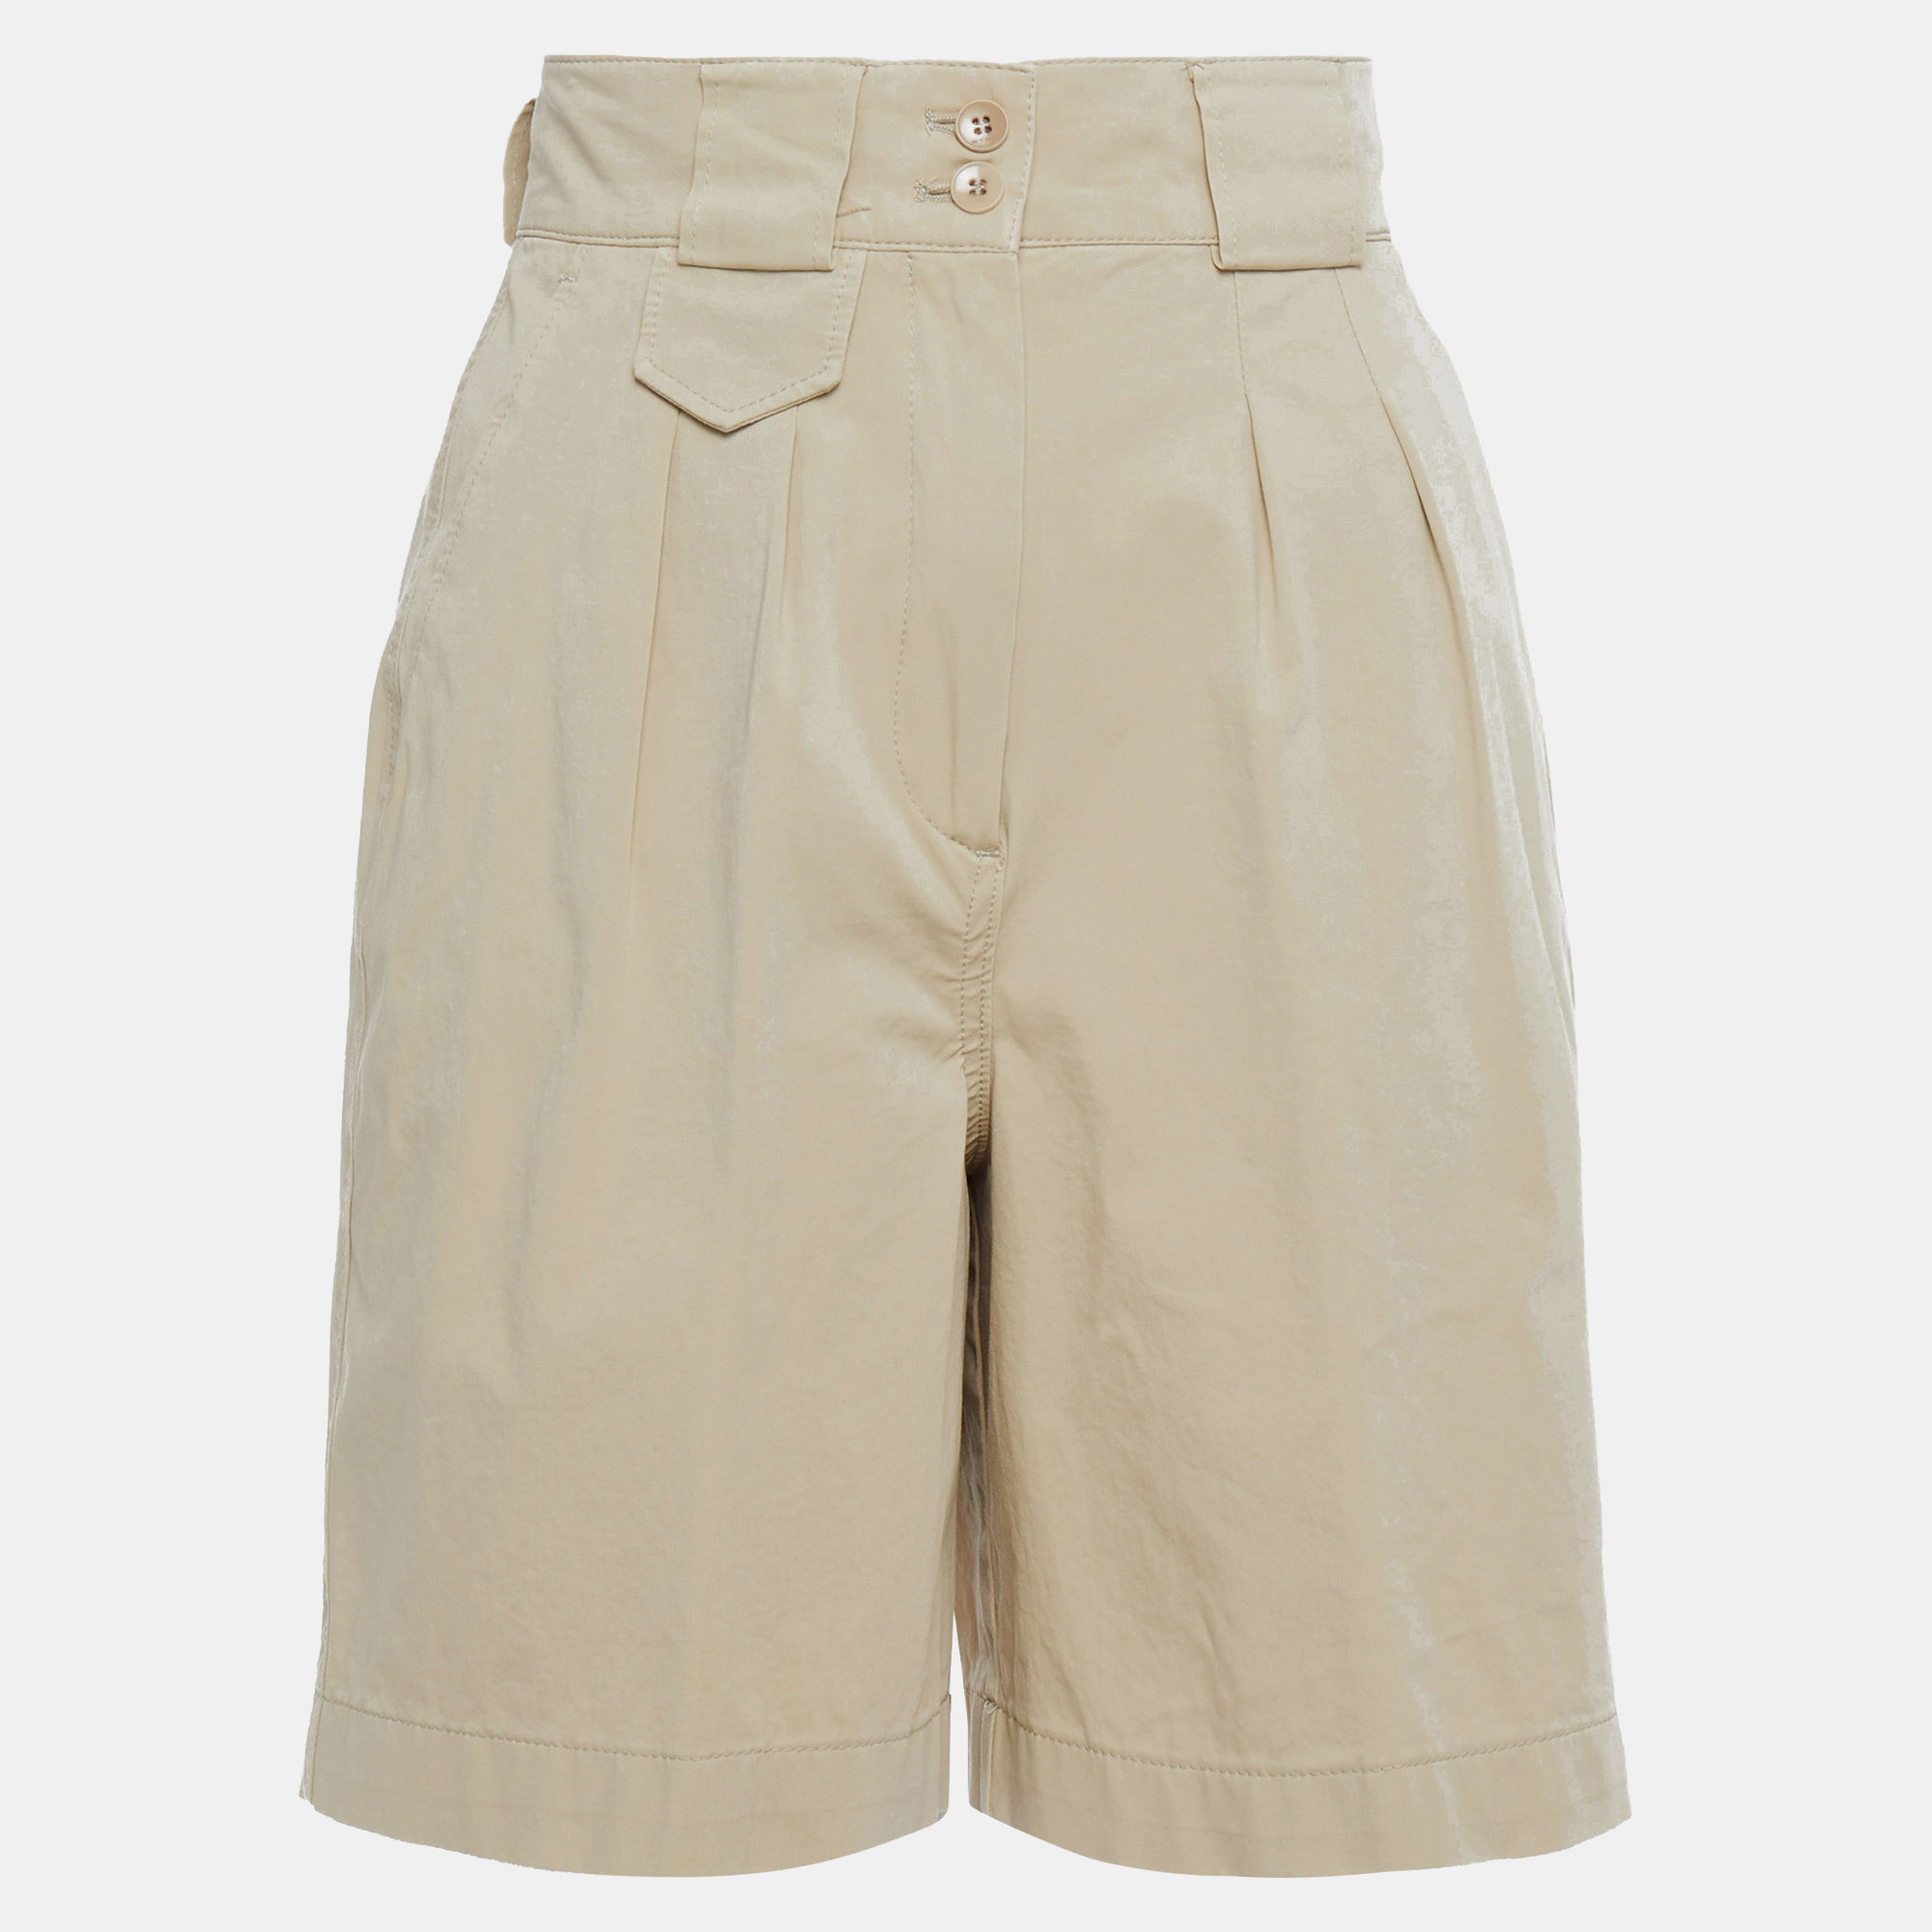 Etro cotton shorts 40